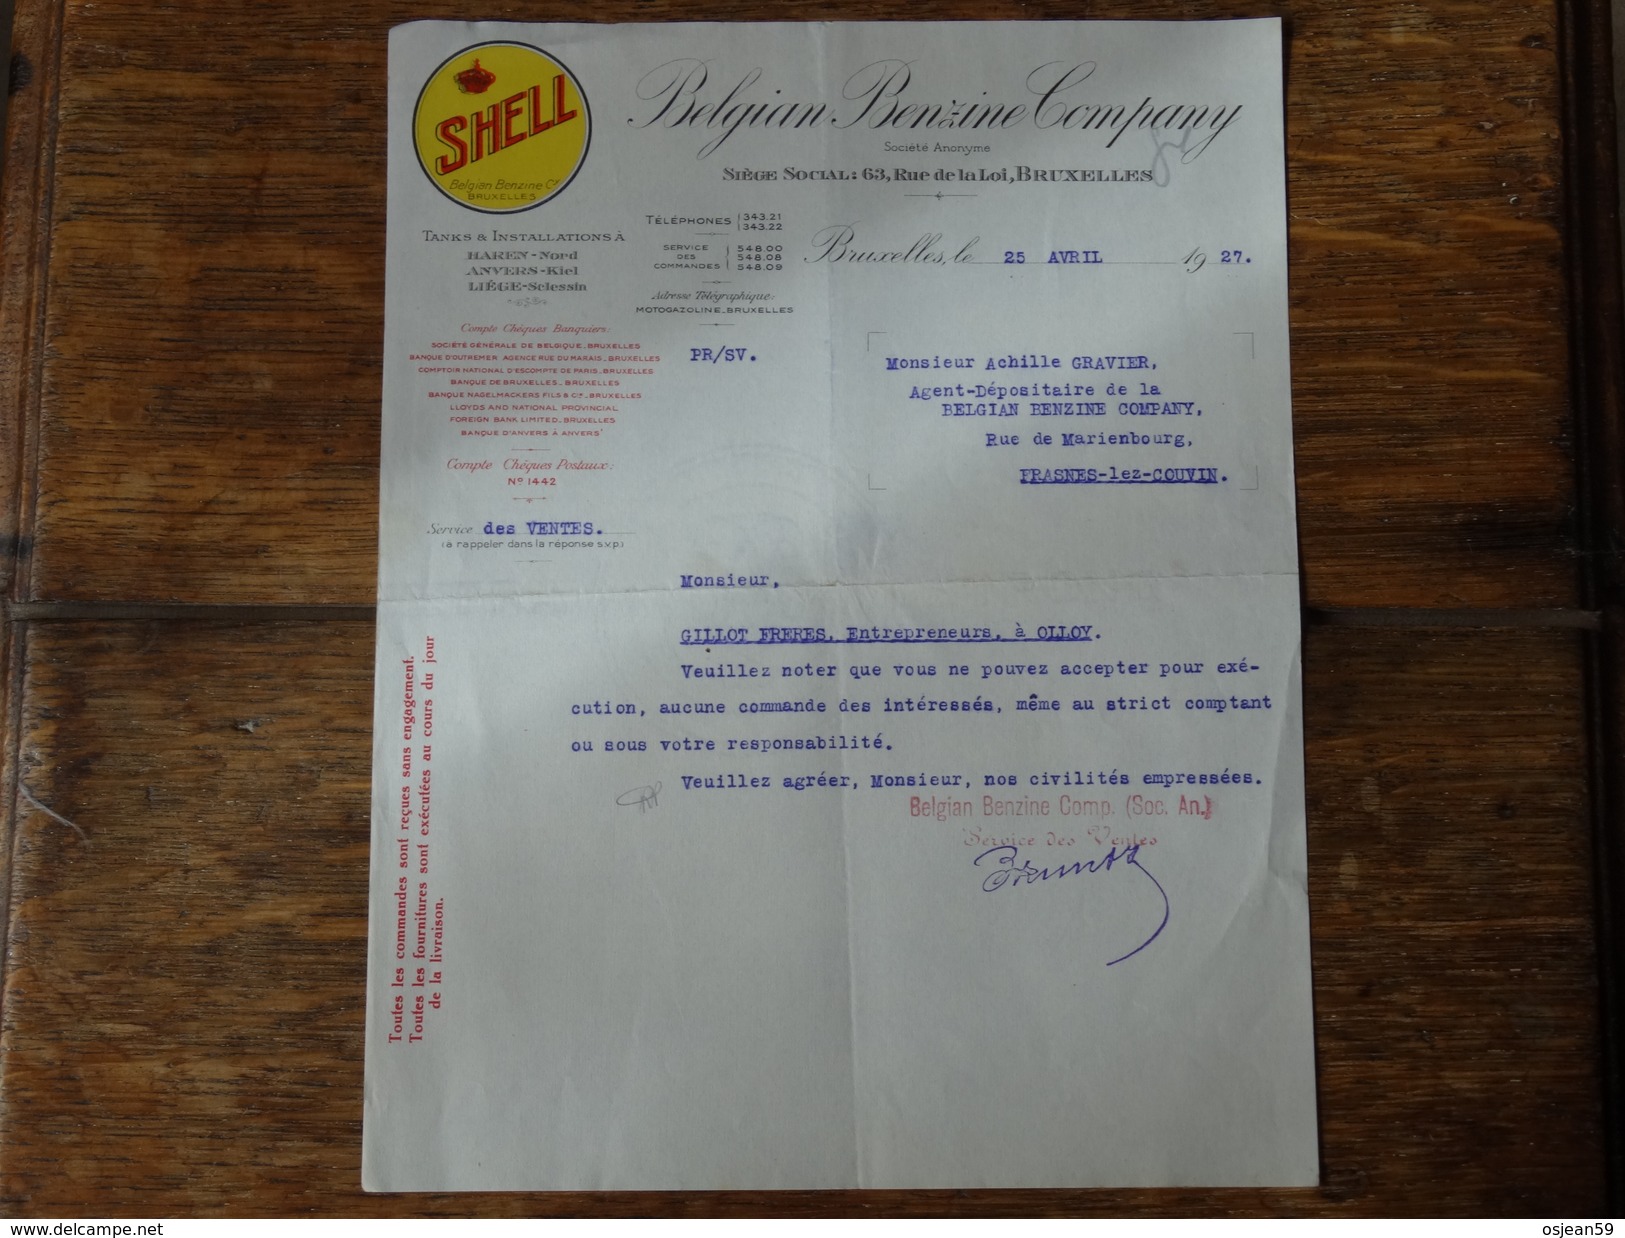 SHELL-Belgian Benzine Company - Courier Du 25 Avril 1927. - Cars